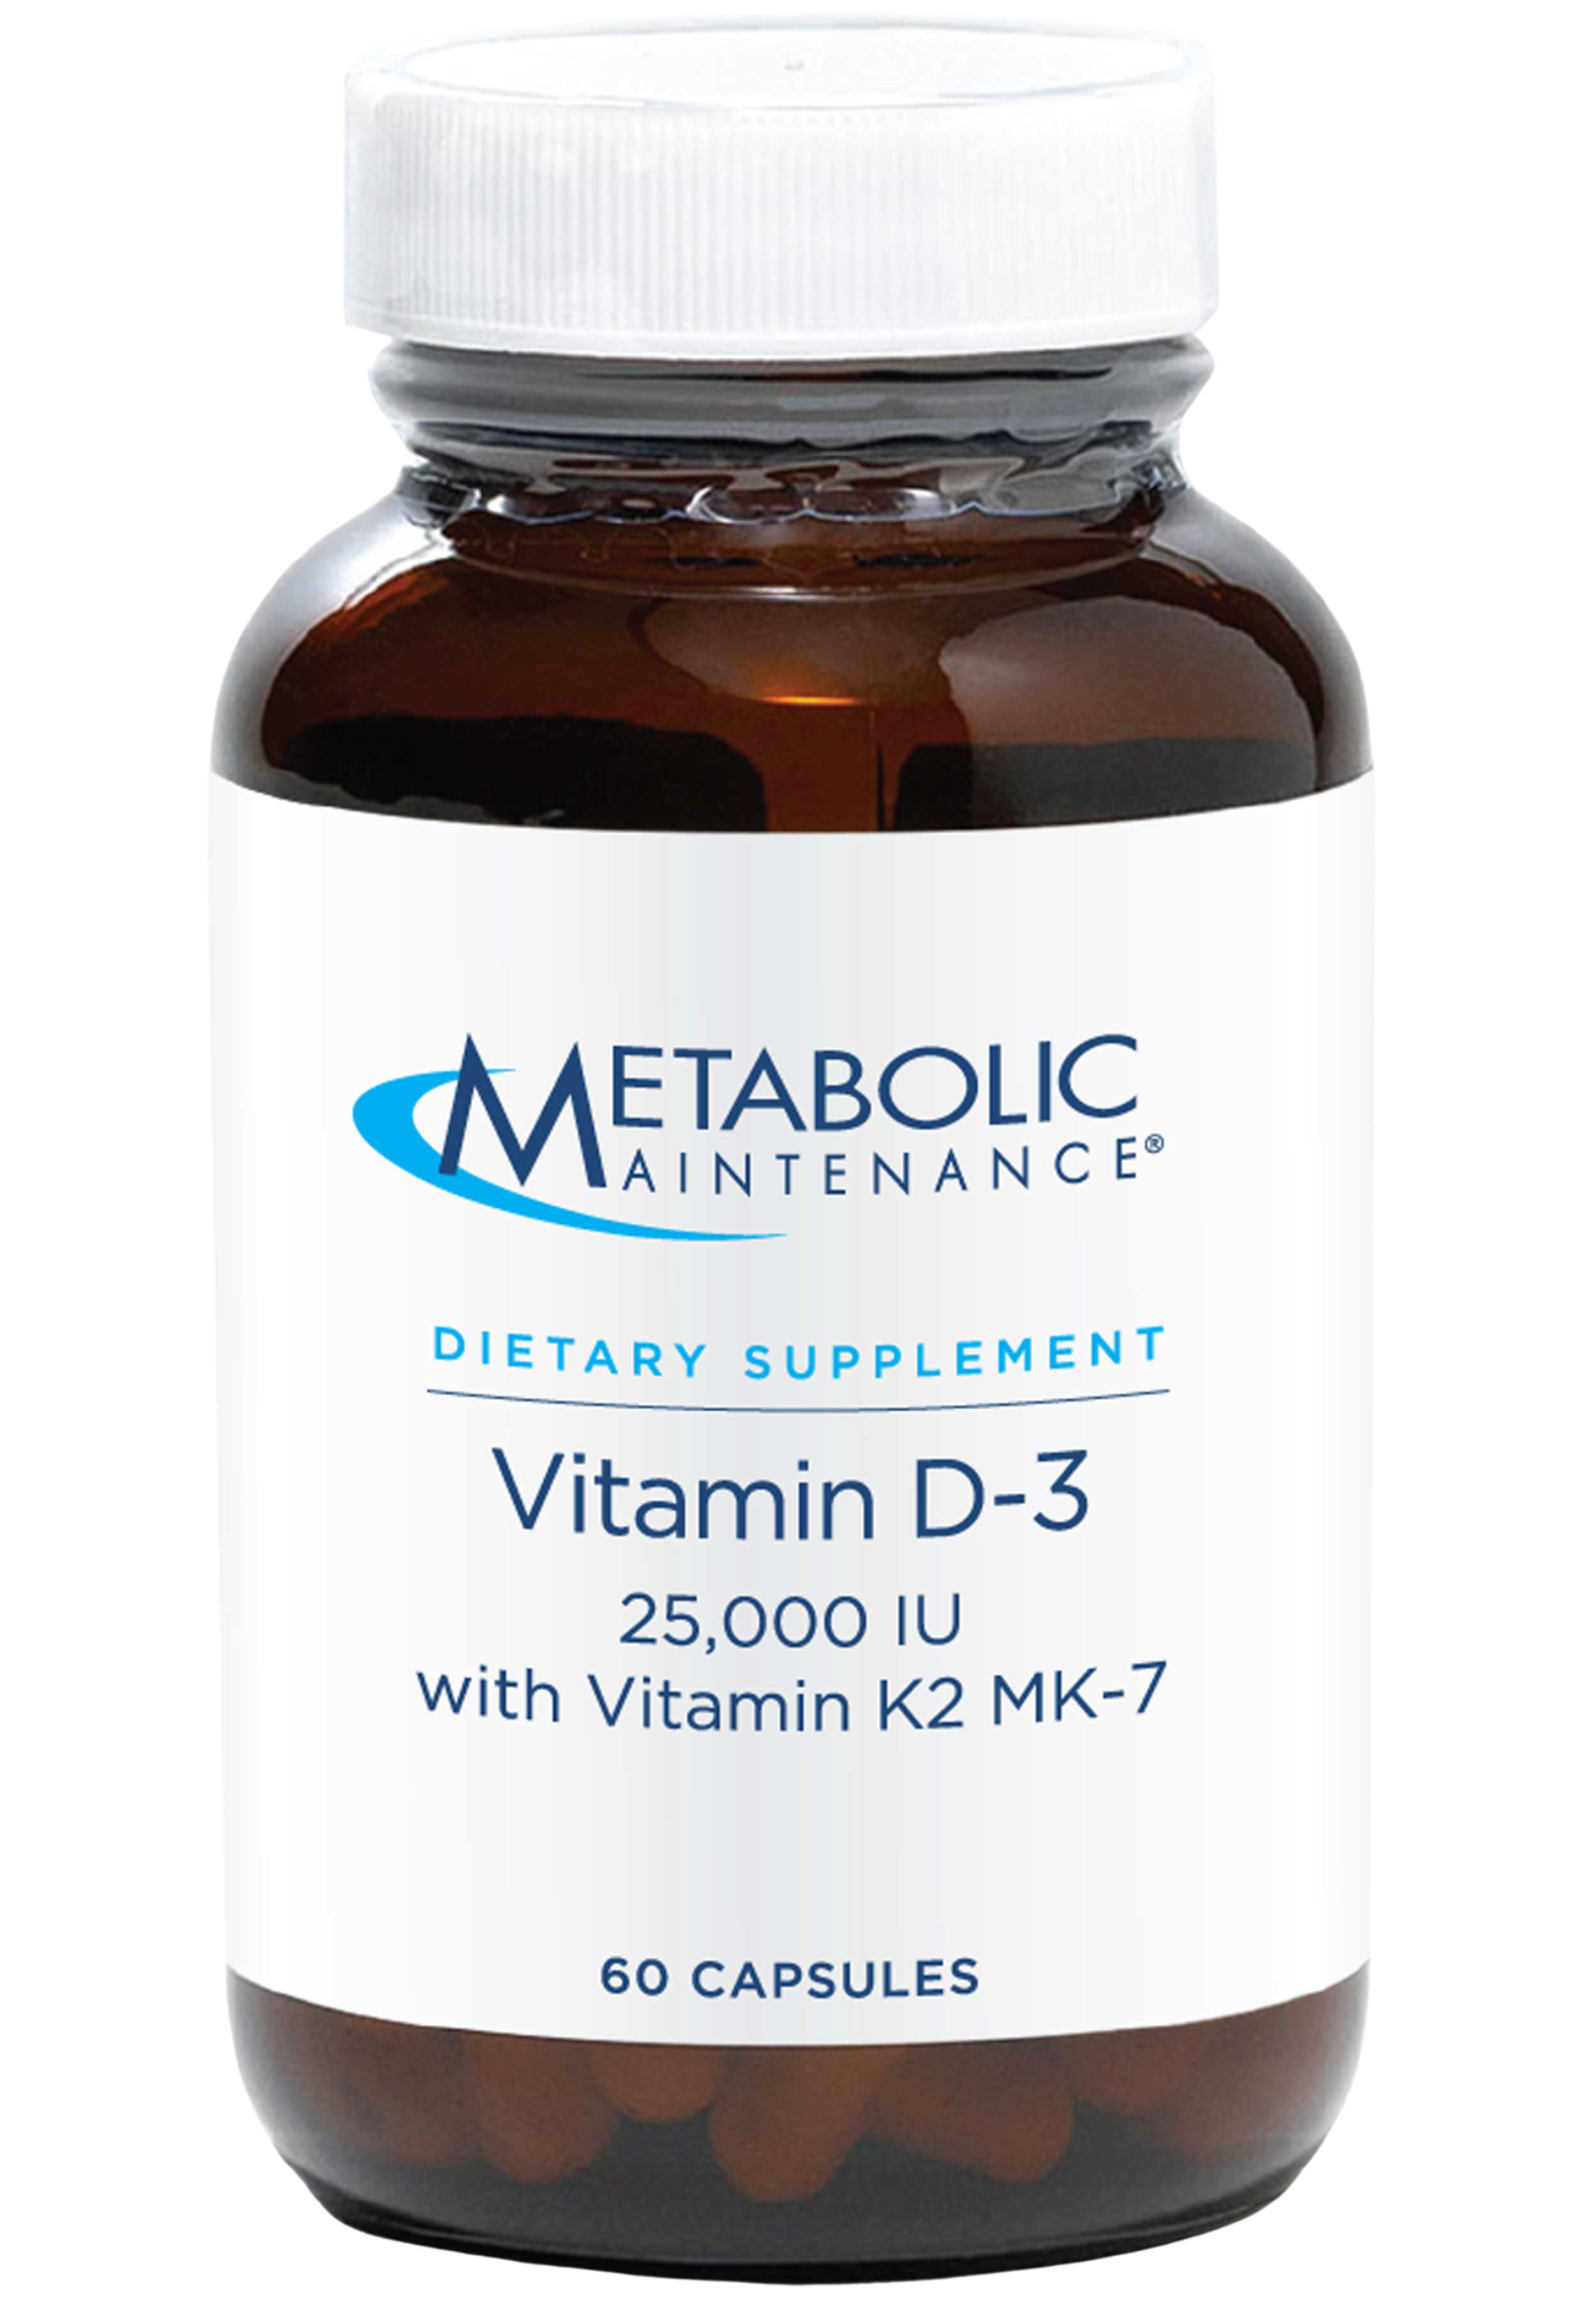 Metabolic Maintenance Vitamin D-3, 25,000 IU with Vitamin K2 MK-7